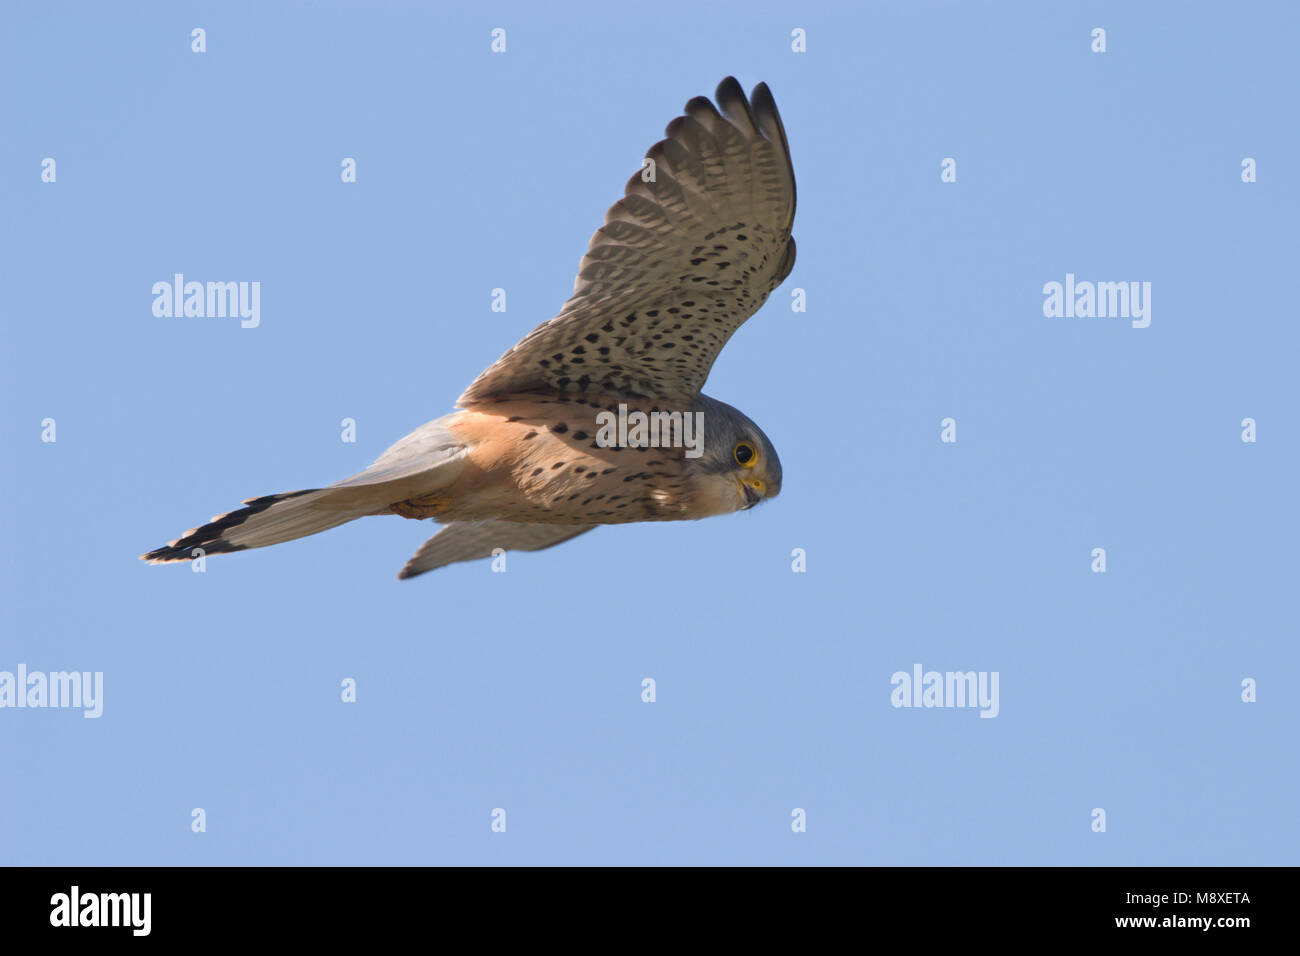 biddende jagende Torenvalk in blauwe lucht. Common Kestrel hovering hunting against blue sky Stock Photo